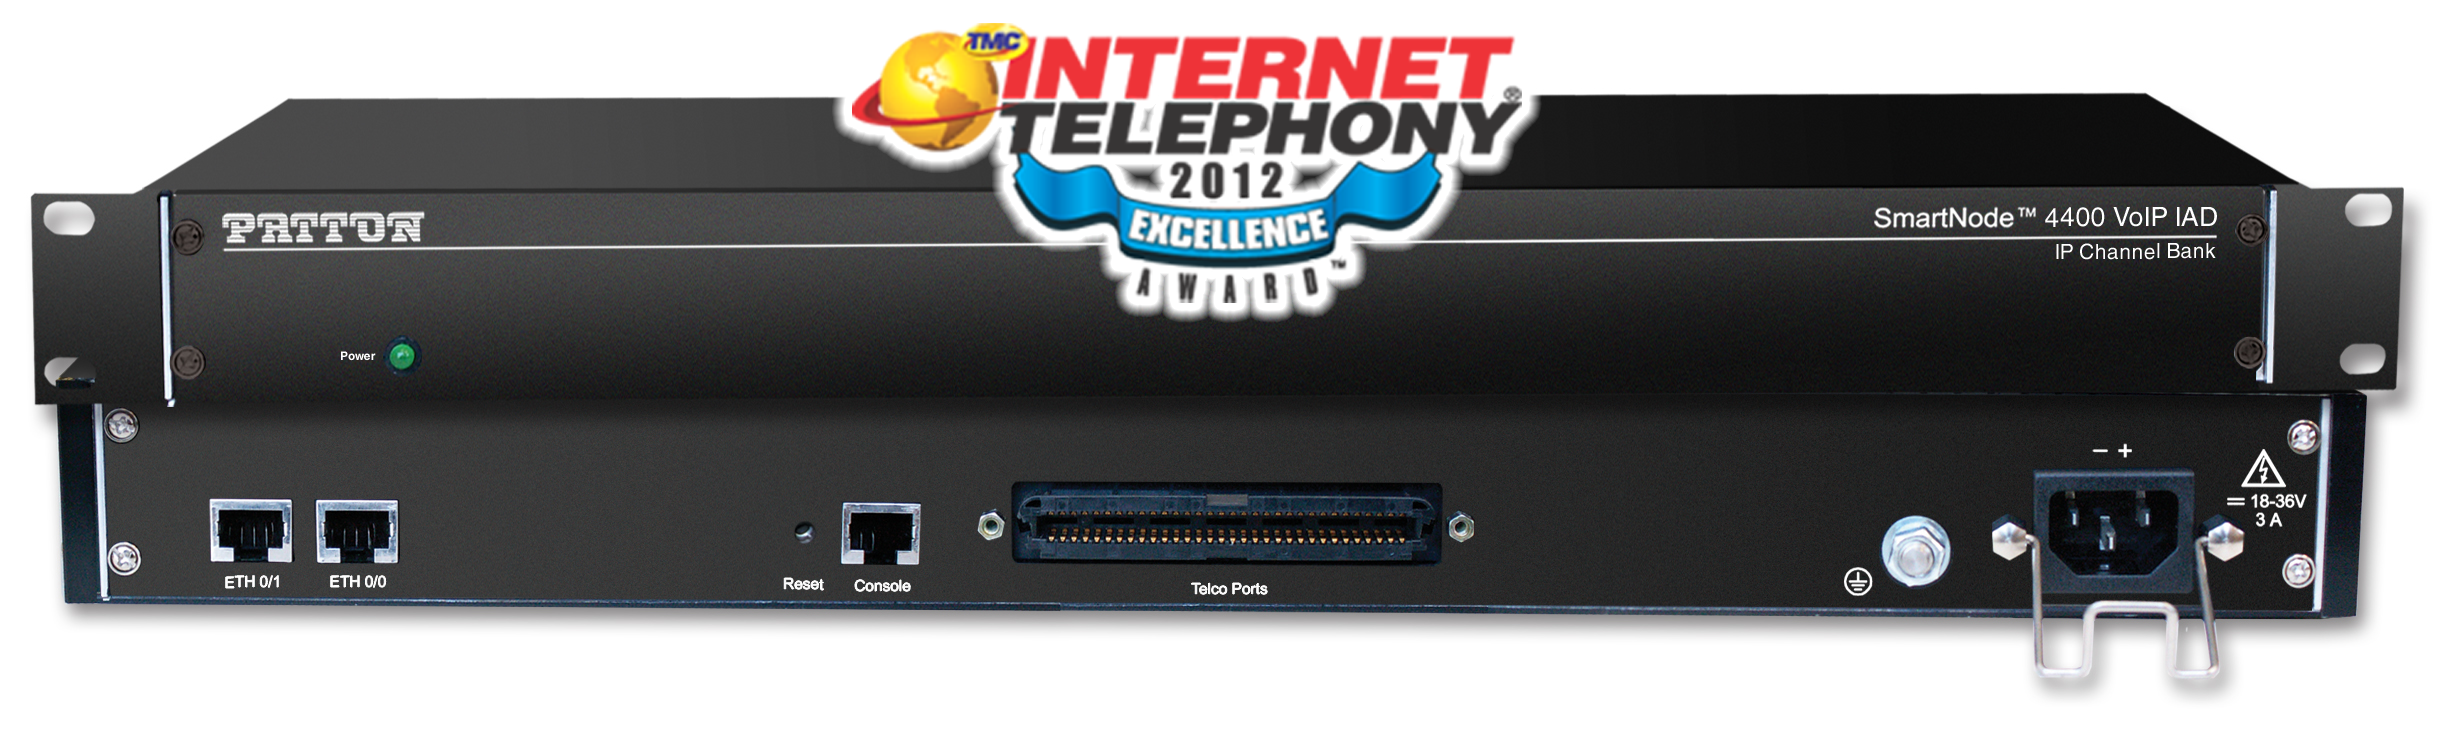 Patton SmartNode SN4432/JO/UI IpChannelBank Analog VoIP Router | 32 FXO ports